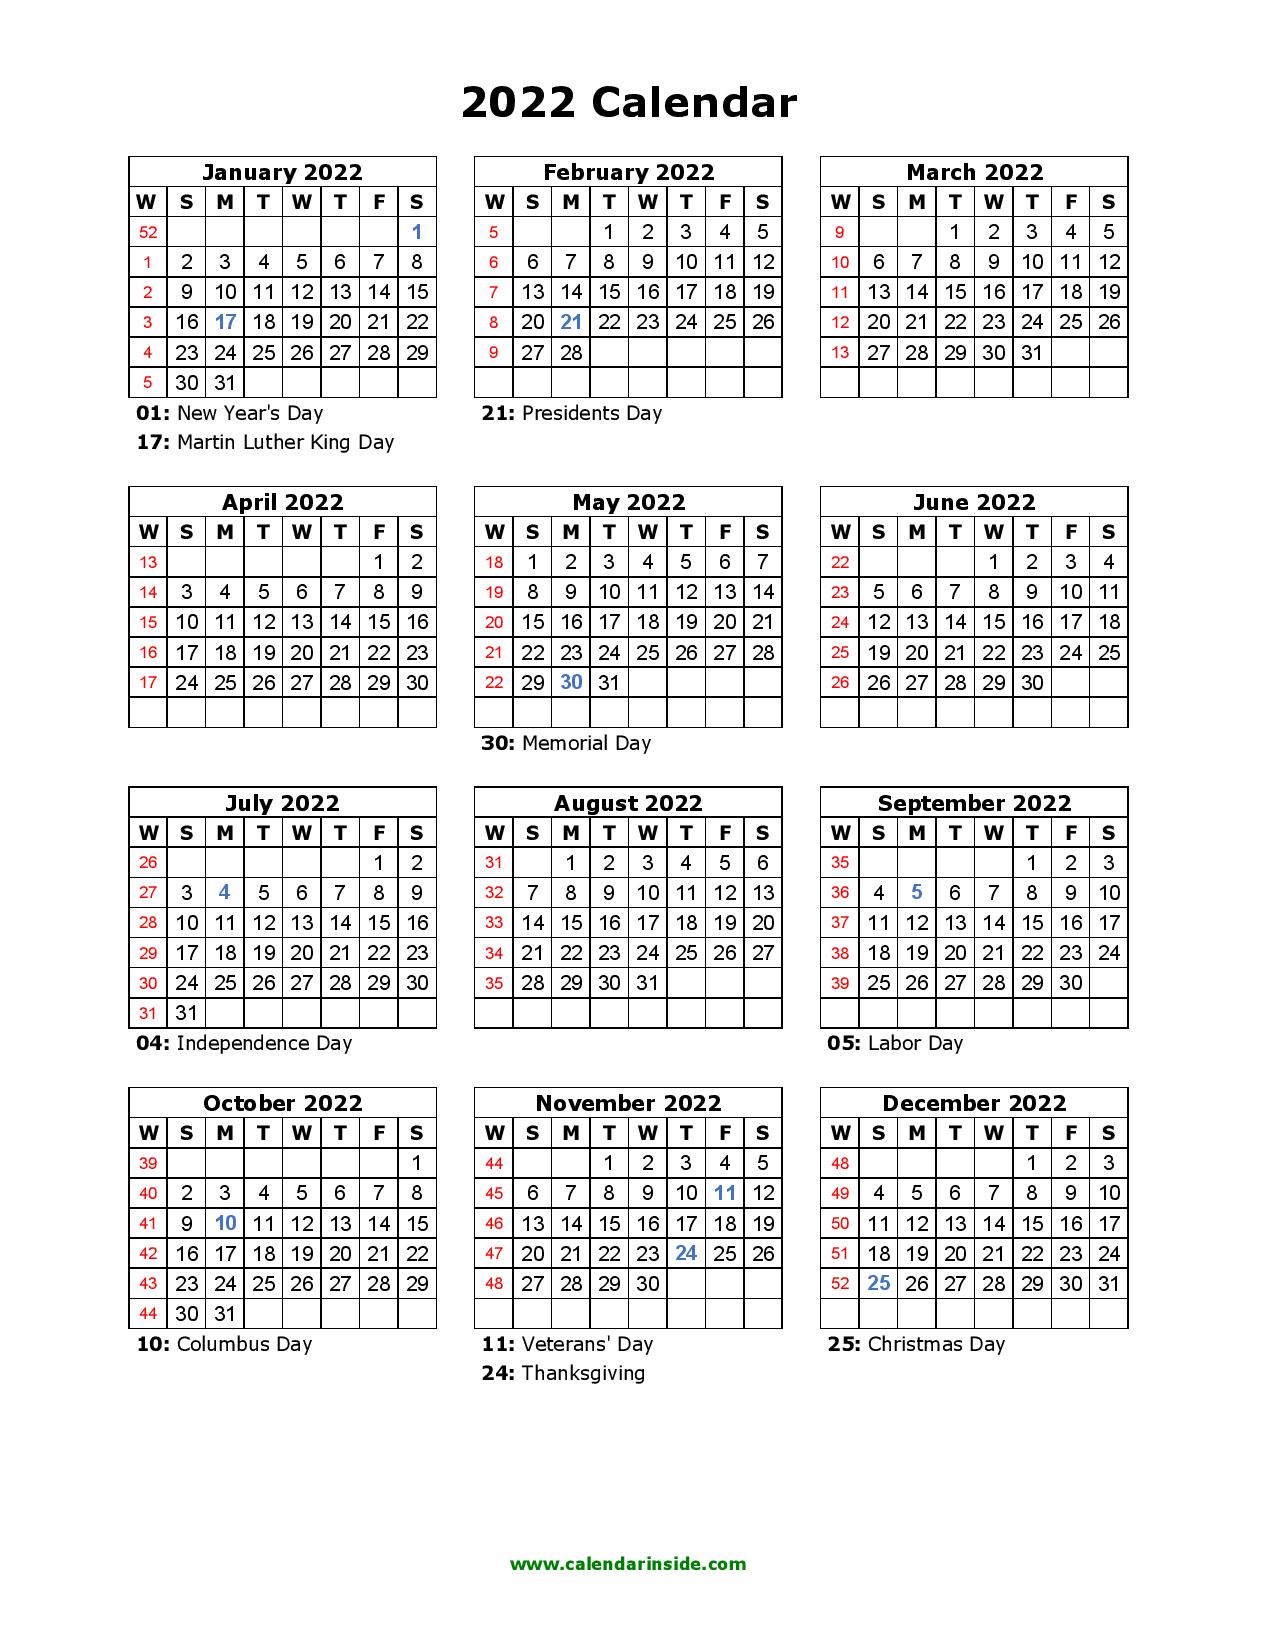 calendar 2022 editable